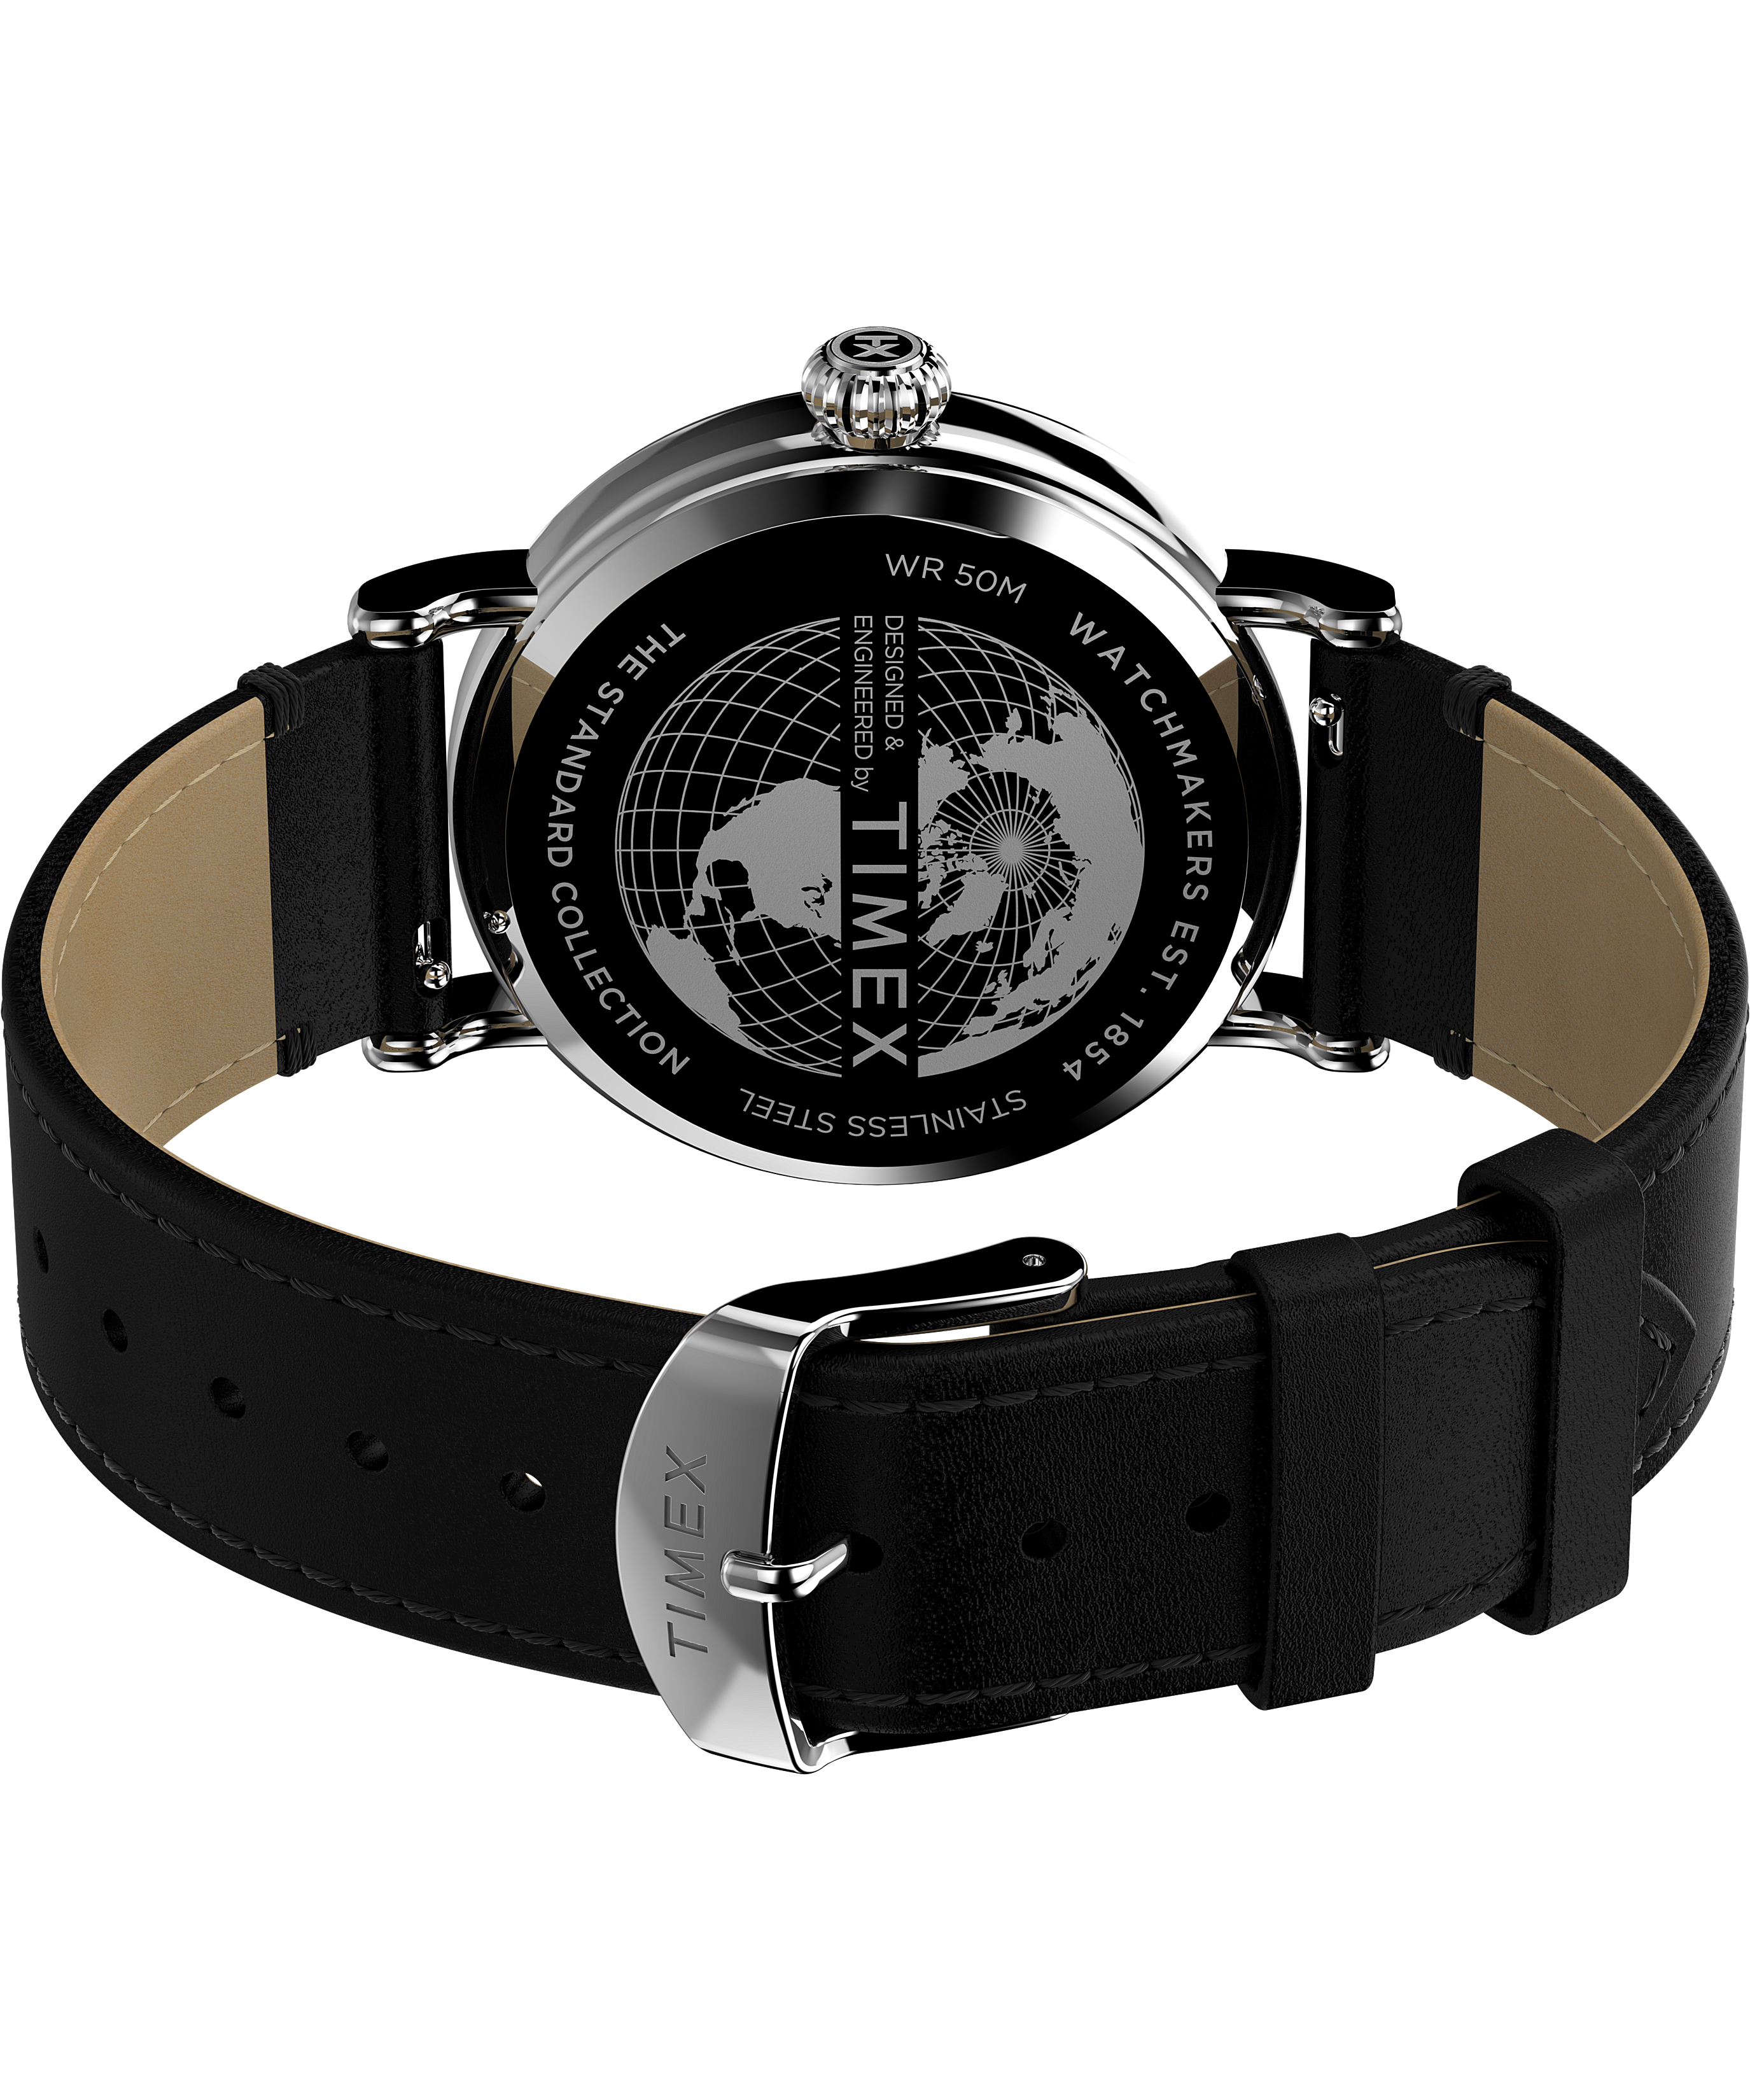 Timex Standard Día de los Muertos 40mm Leather Strap Watch - Timex EU